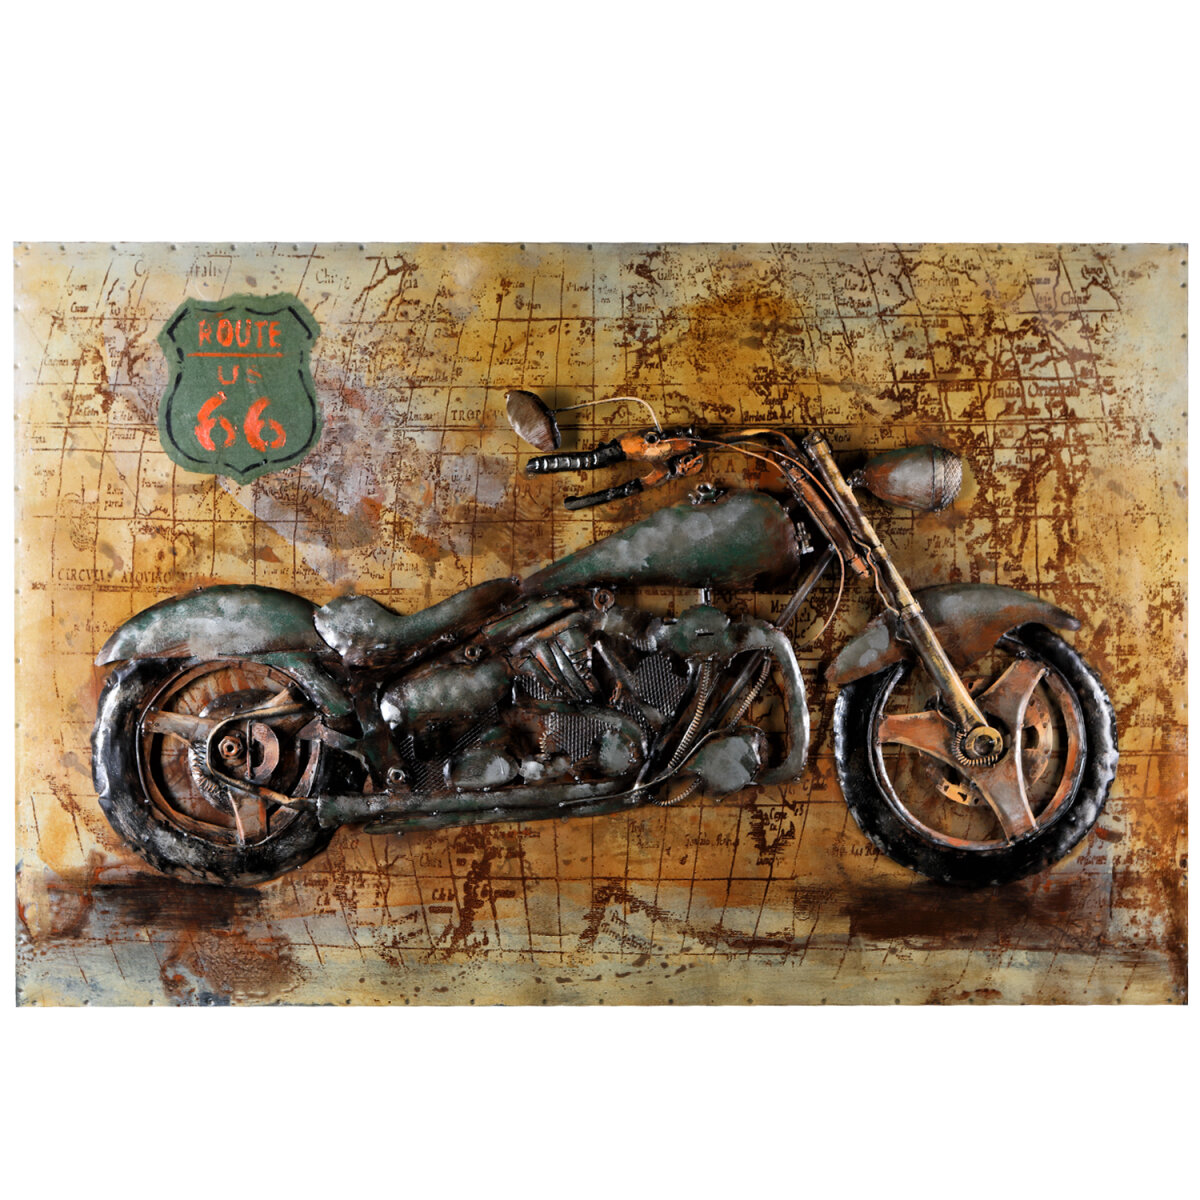 Metallbild Motorcycle 66 Wandbild 3D Bild Metall Relief Unikat Handma,  219,99 €